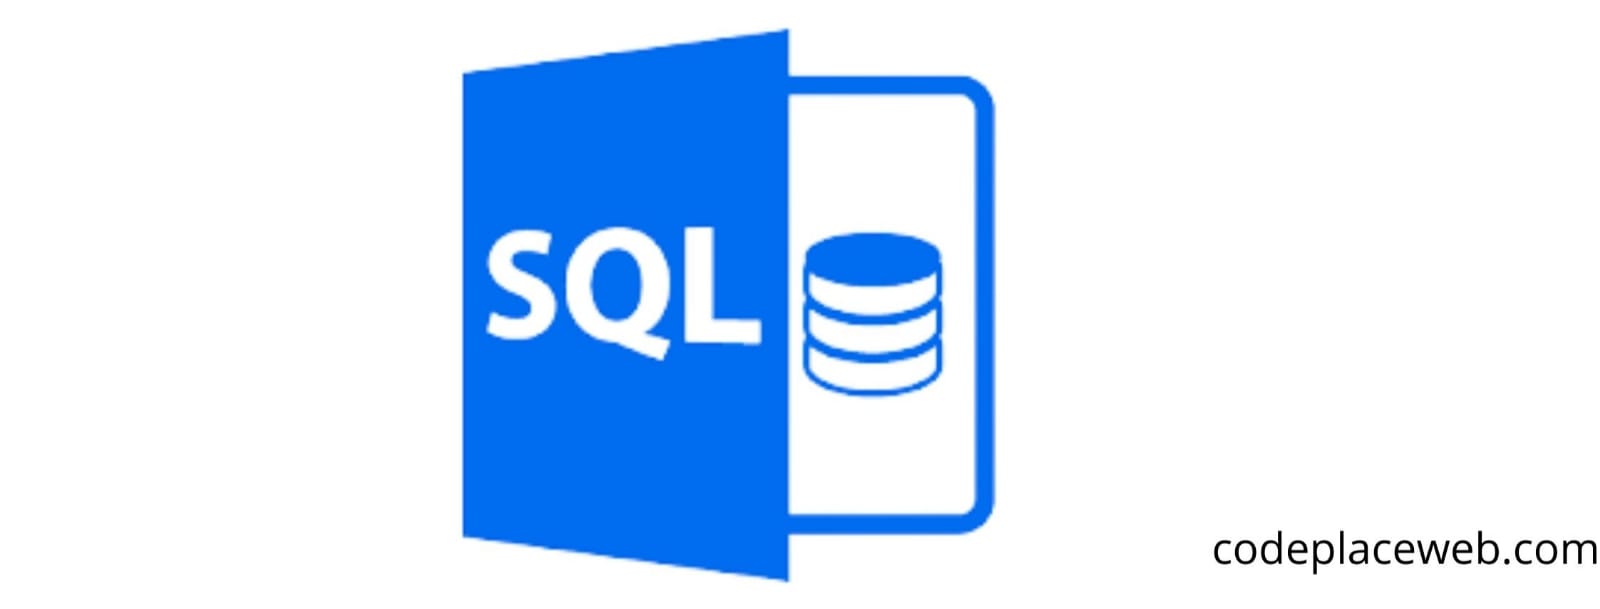 SQL Programming Languages for Web Development